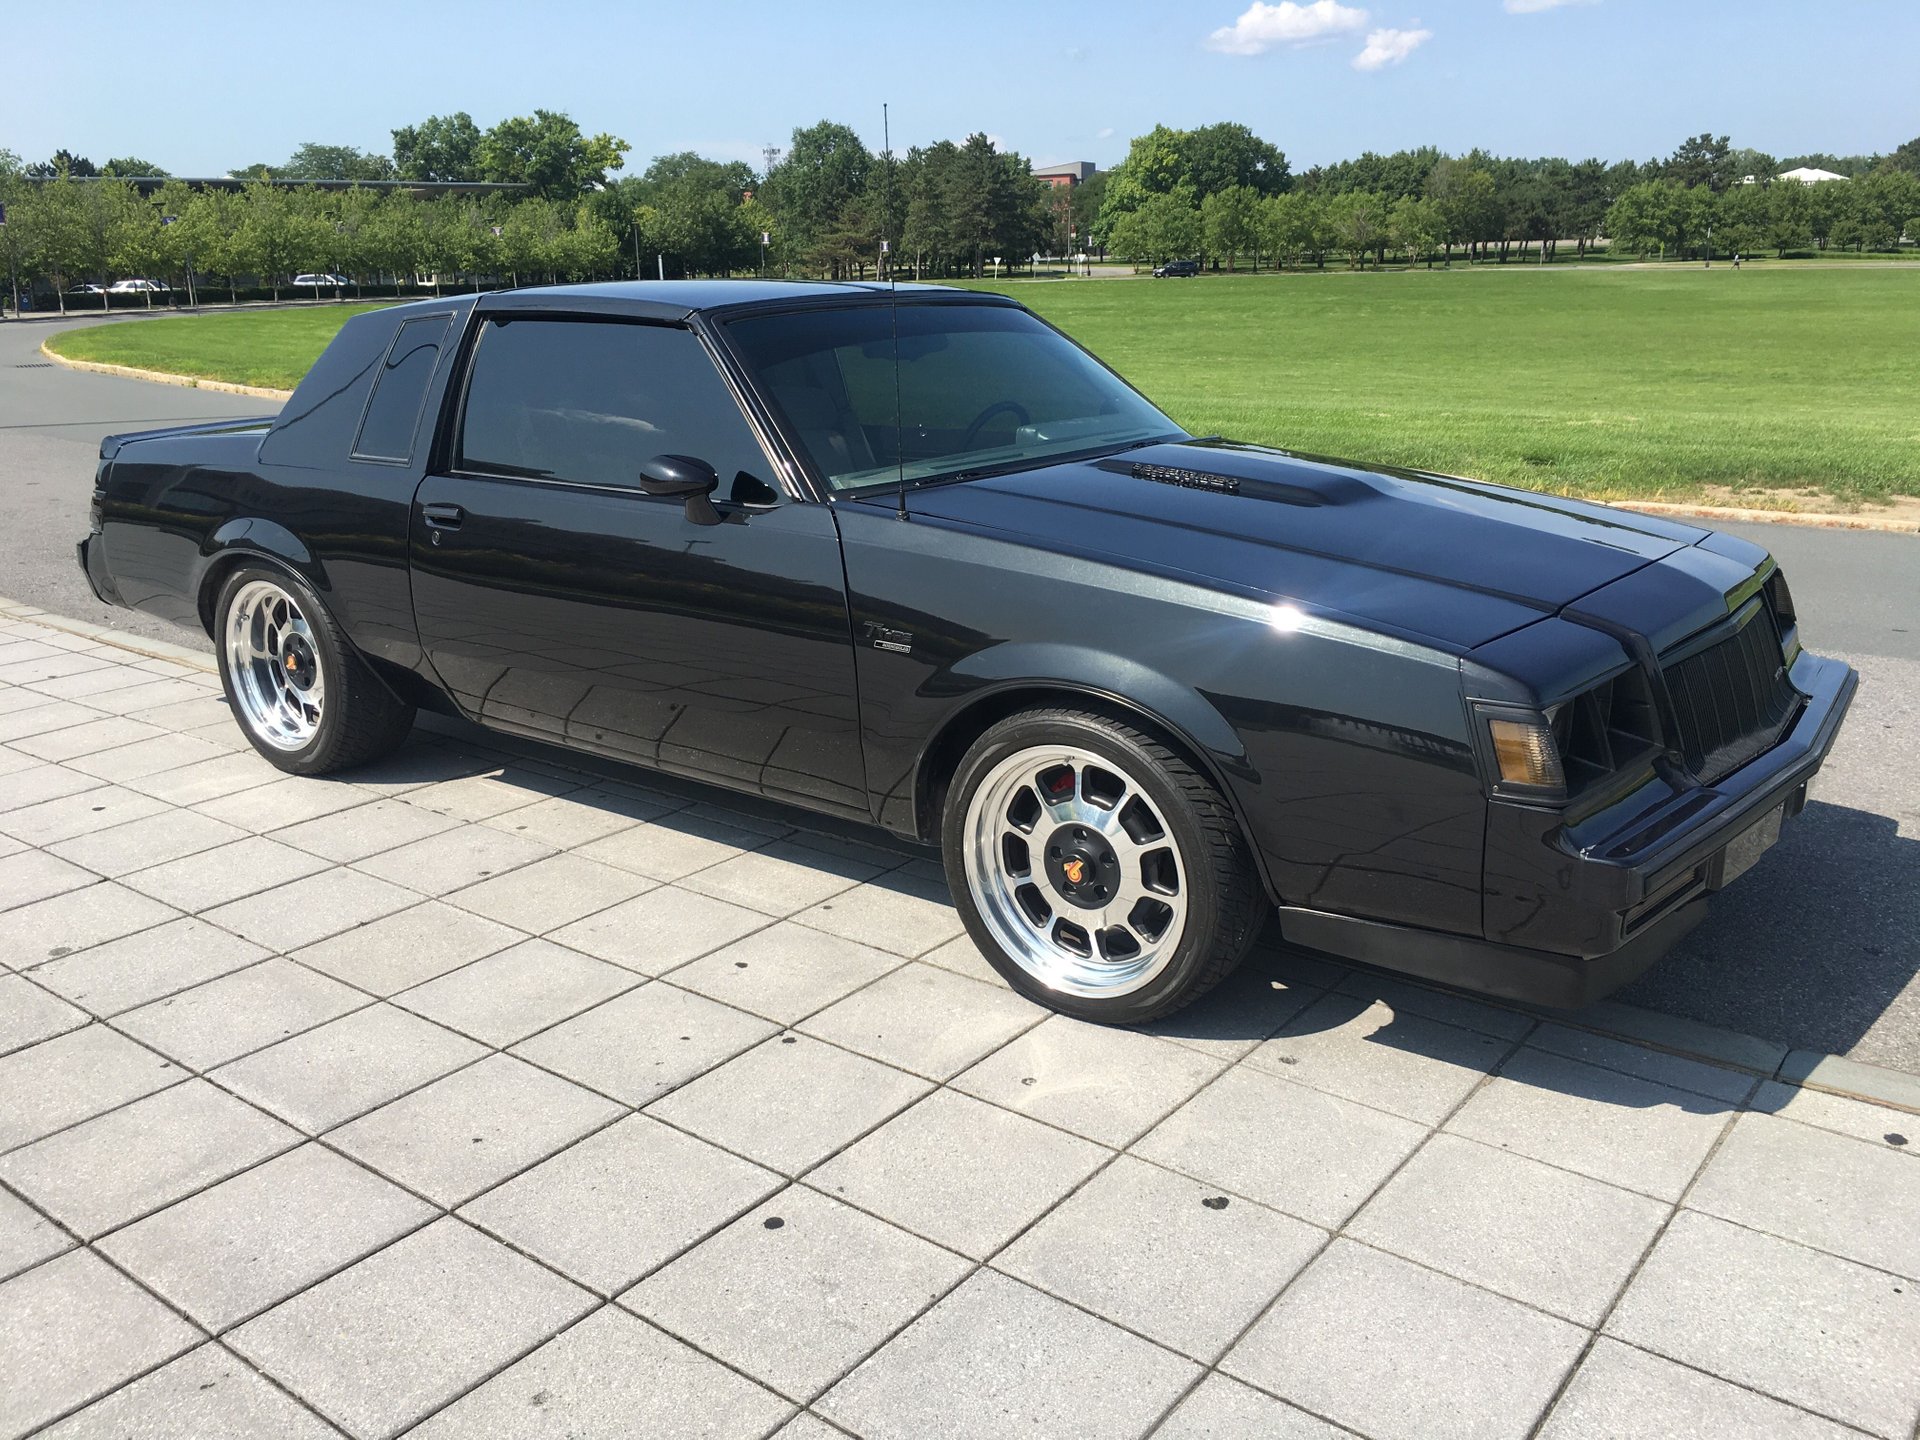 1986 Buick Regal | Saratoga Motorcar Auction